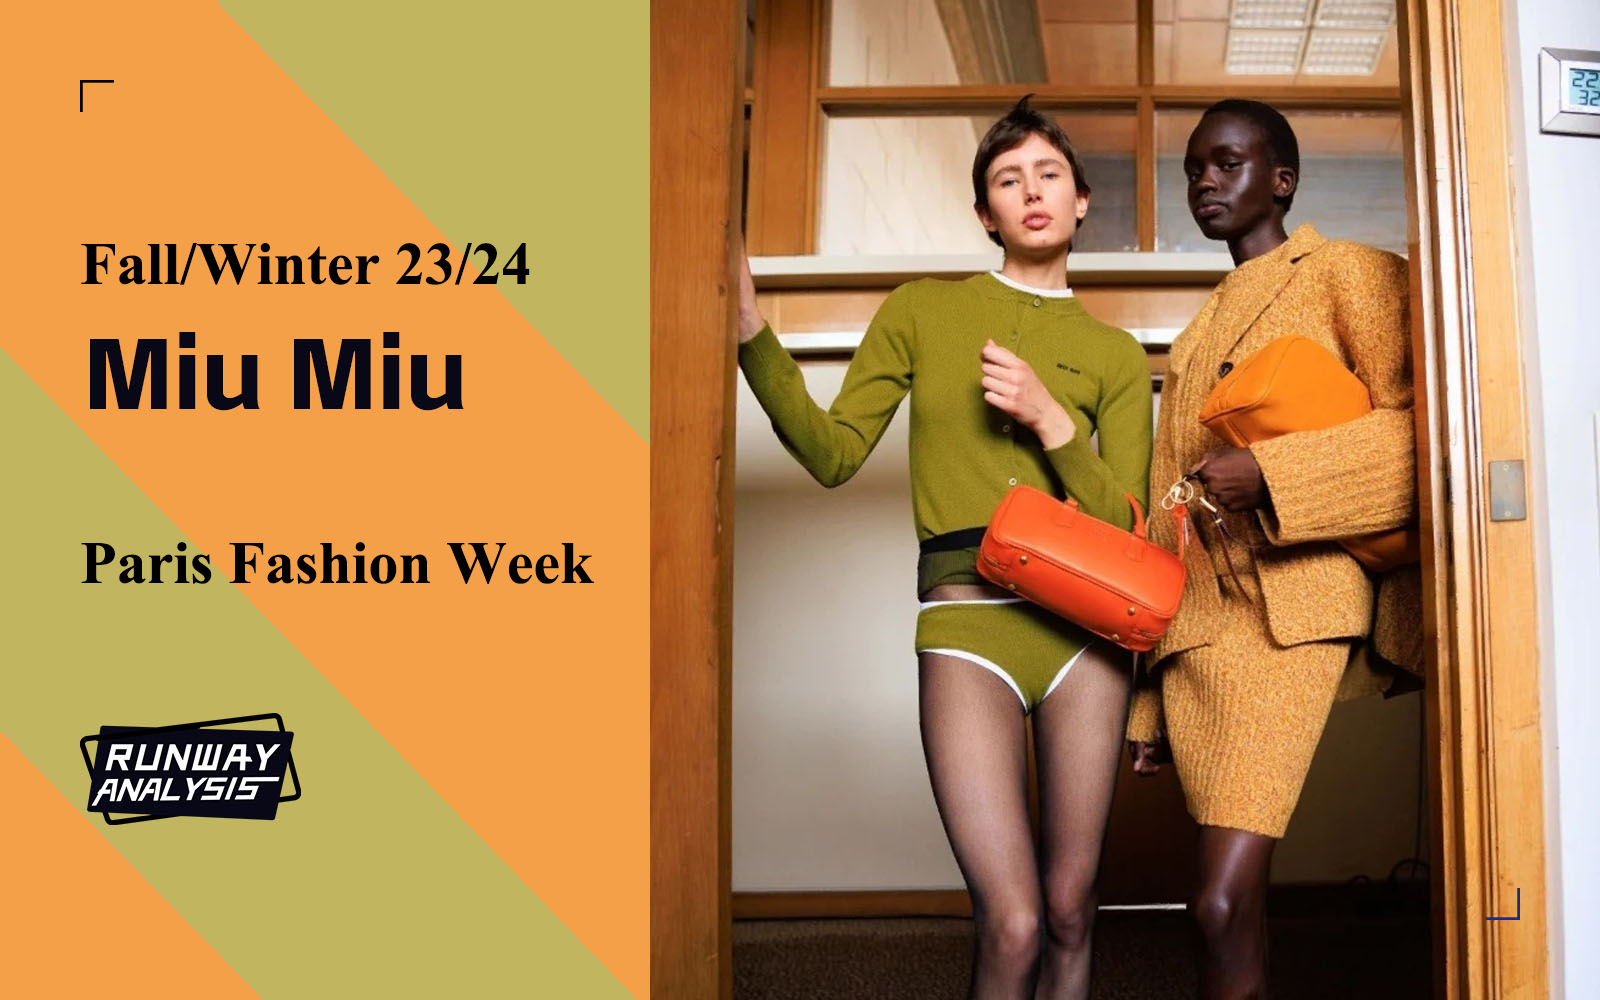 Subtle Sophistication -- The Womenswear Runway Analysis of Miu Miu